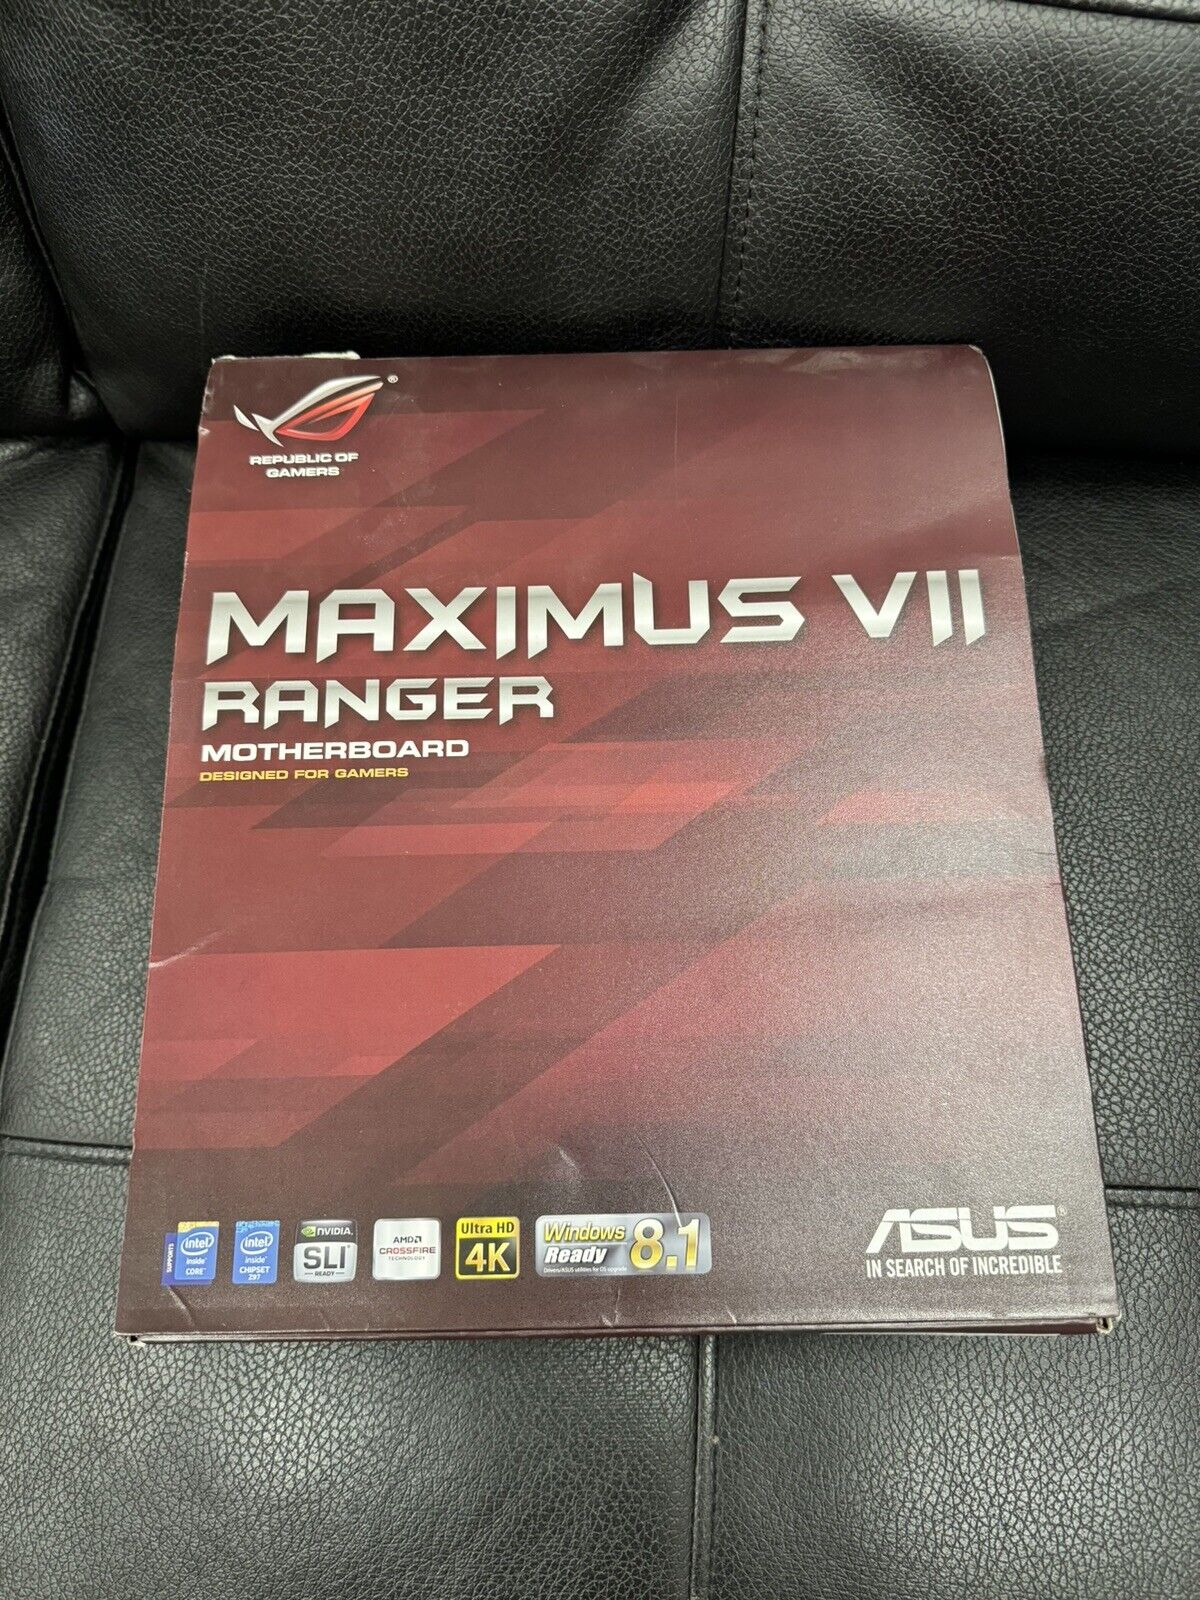 ASUS ROG MAXIMUS VII RANGER Gaming Motherboard LGA1150 DDR3 32G ATX OC Board